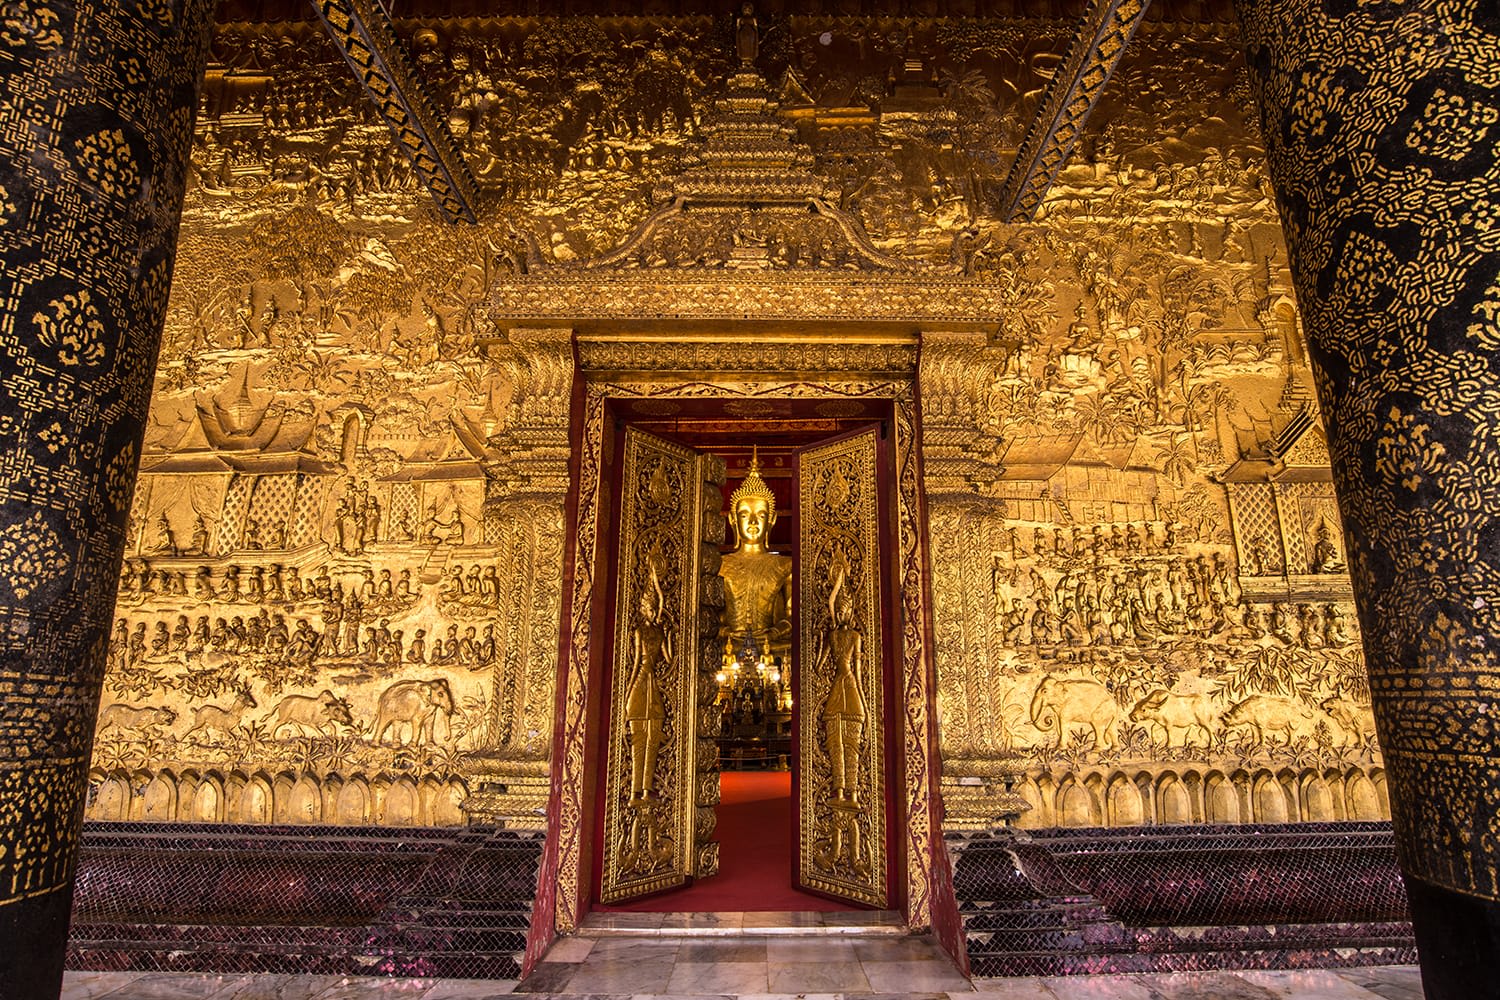 Gilded reliefs and golden door of Wat Mai Suwannaphumaham, an 18th-century Buddhist temple in Luang Prabang, Laos